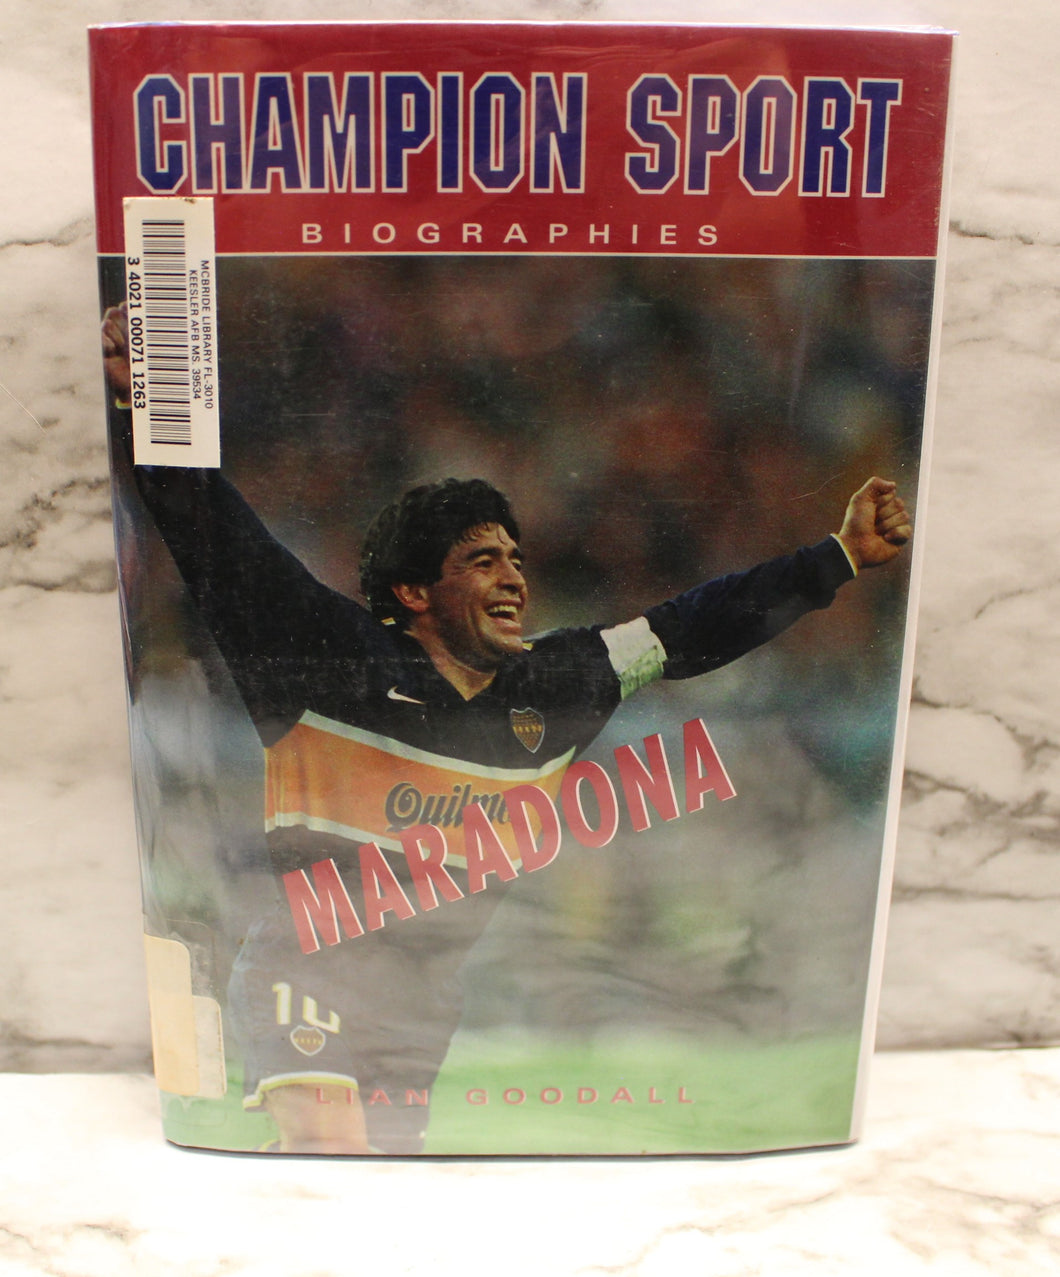 Maradona - Champion Sport Biographies - By Liam Goodall - Used